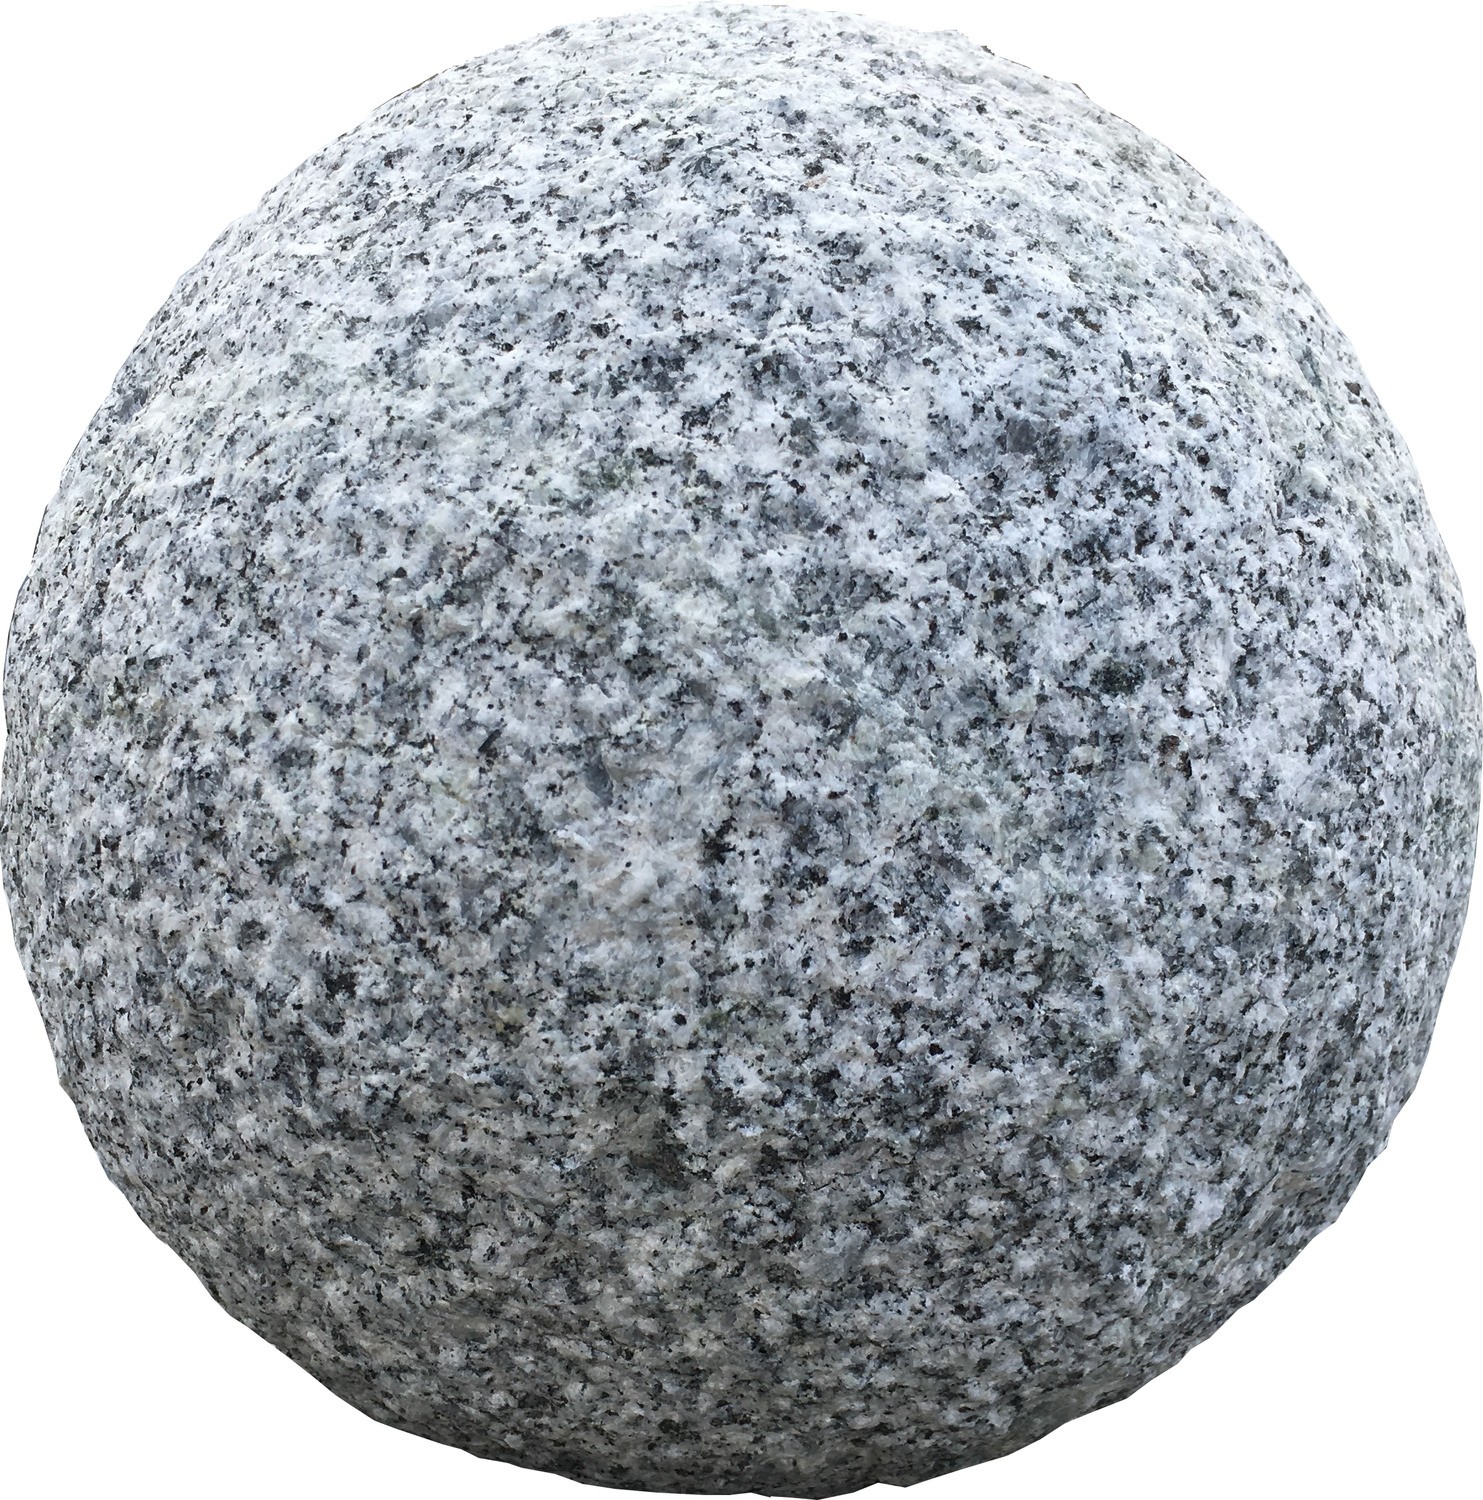 Kugel aus Granit, grau, gestockt, ohne Bohrung